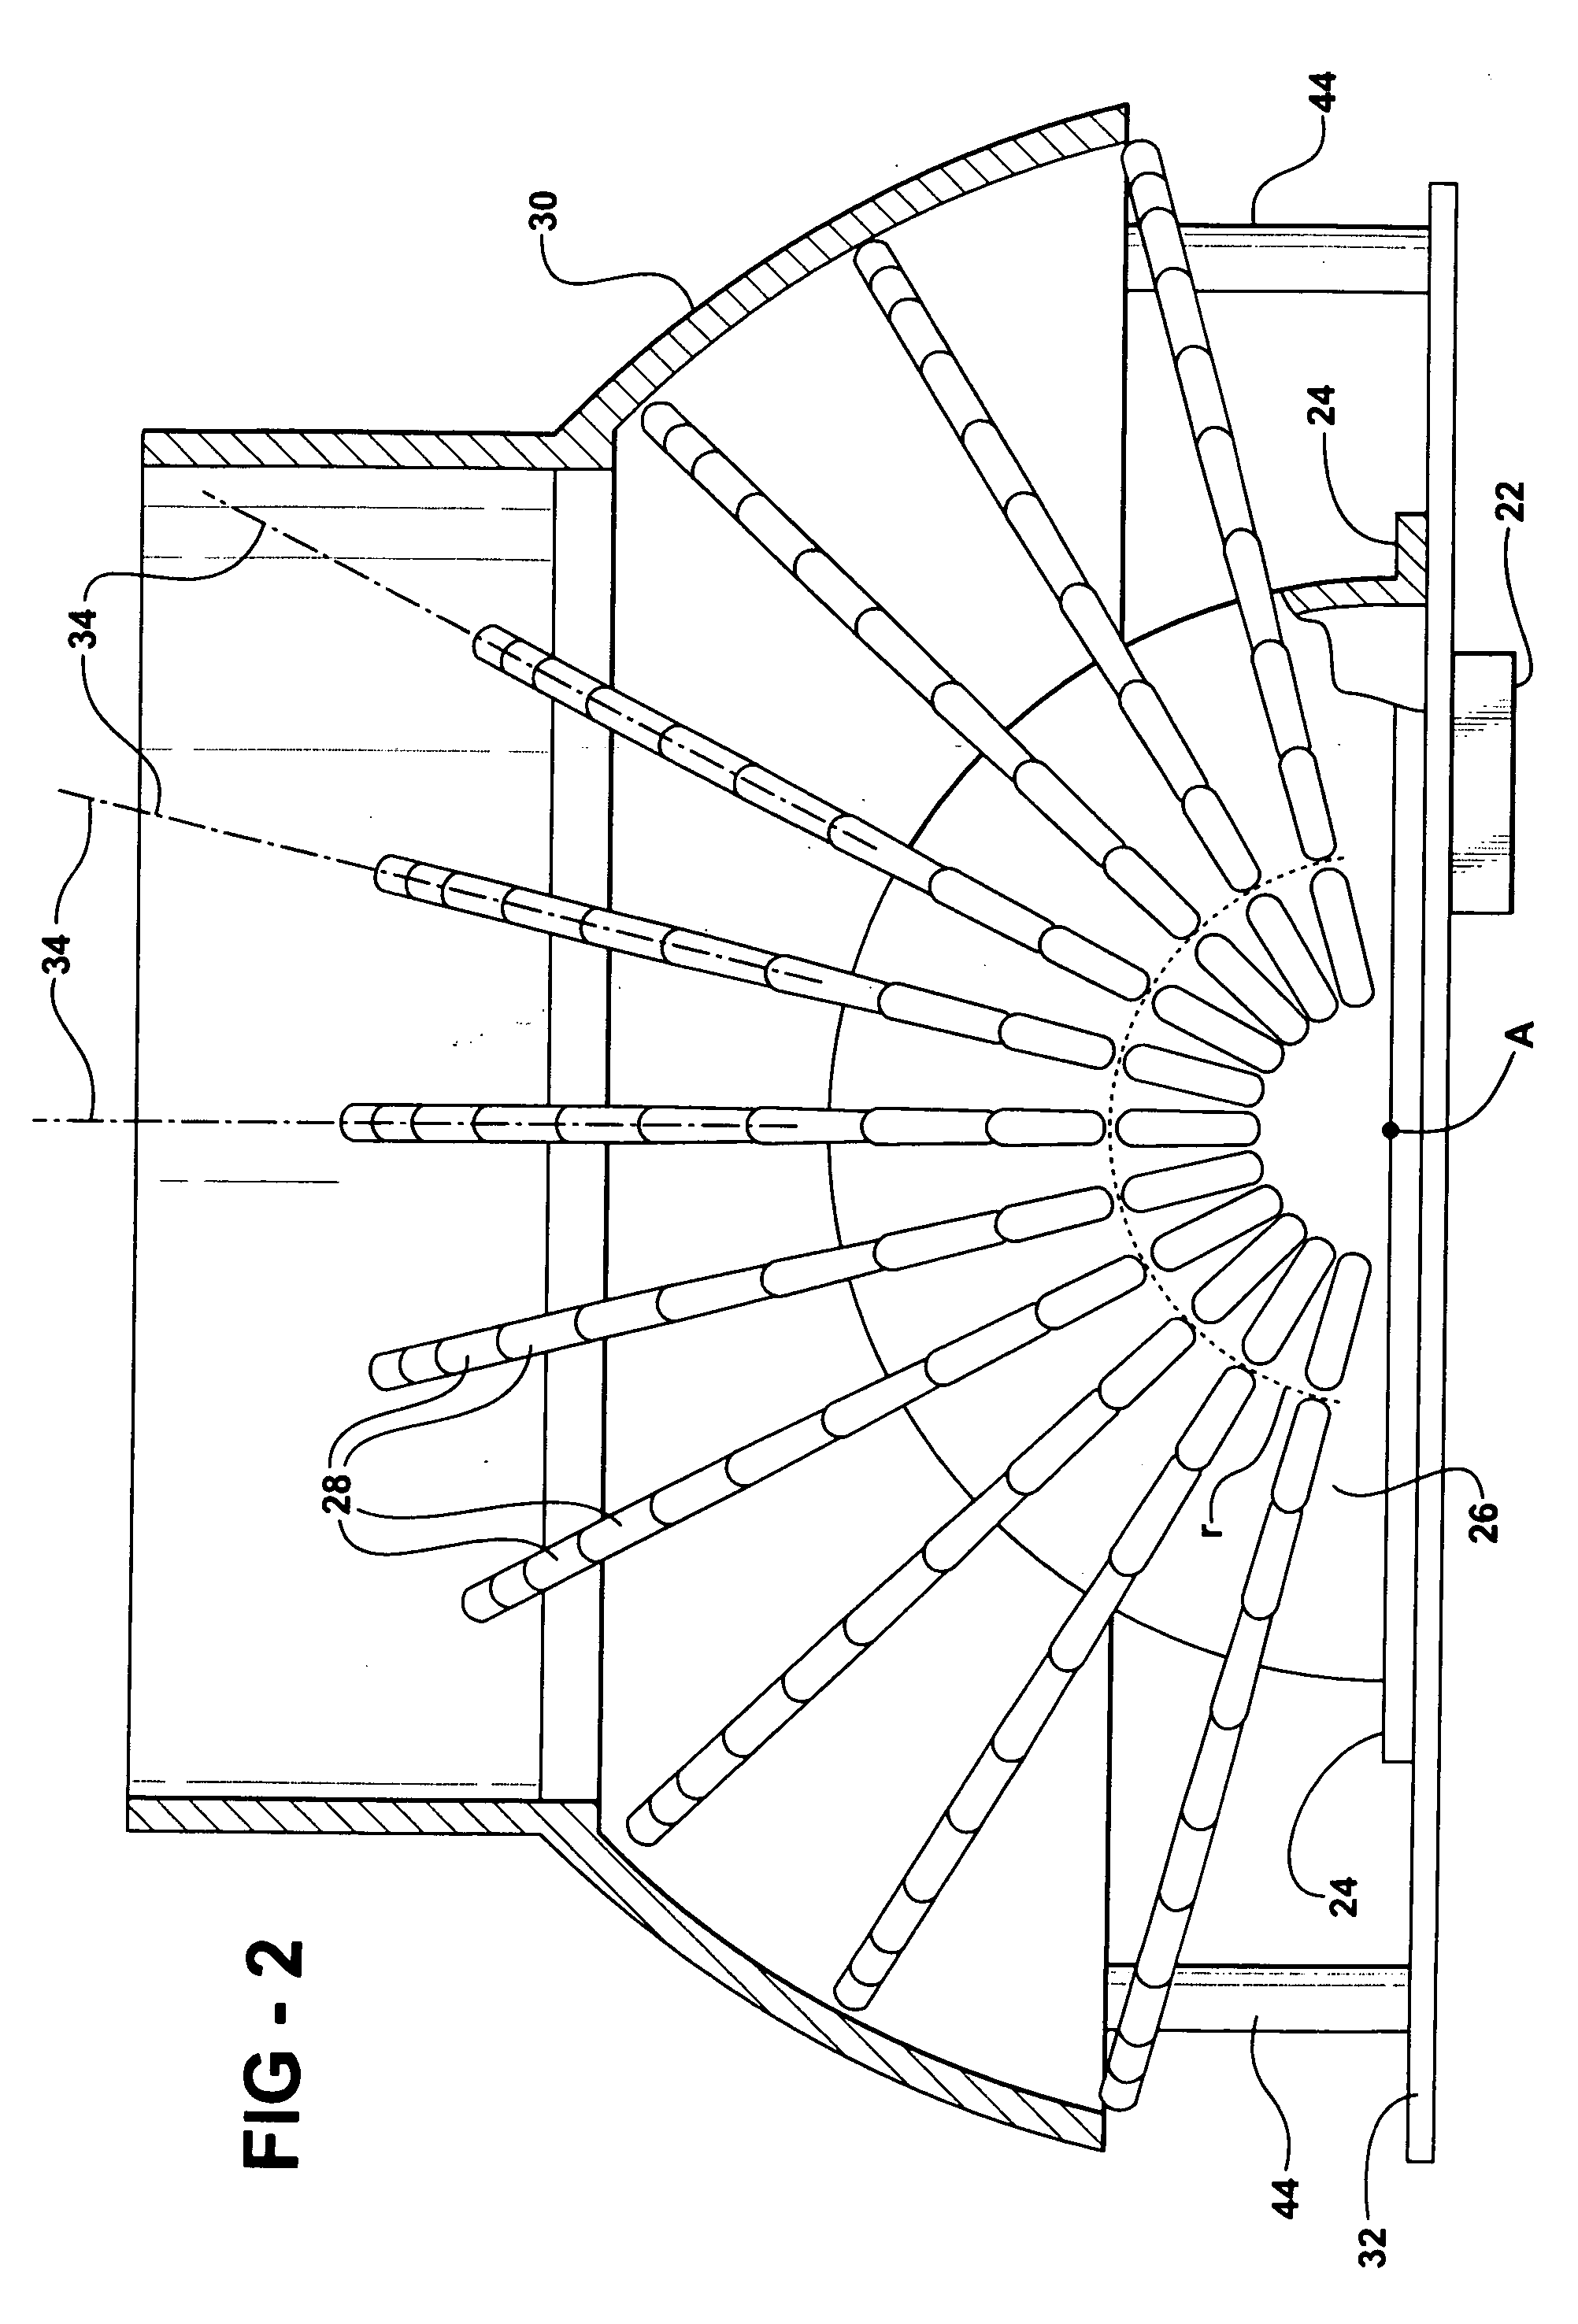 Domed heat exchanger (porcupine)